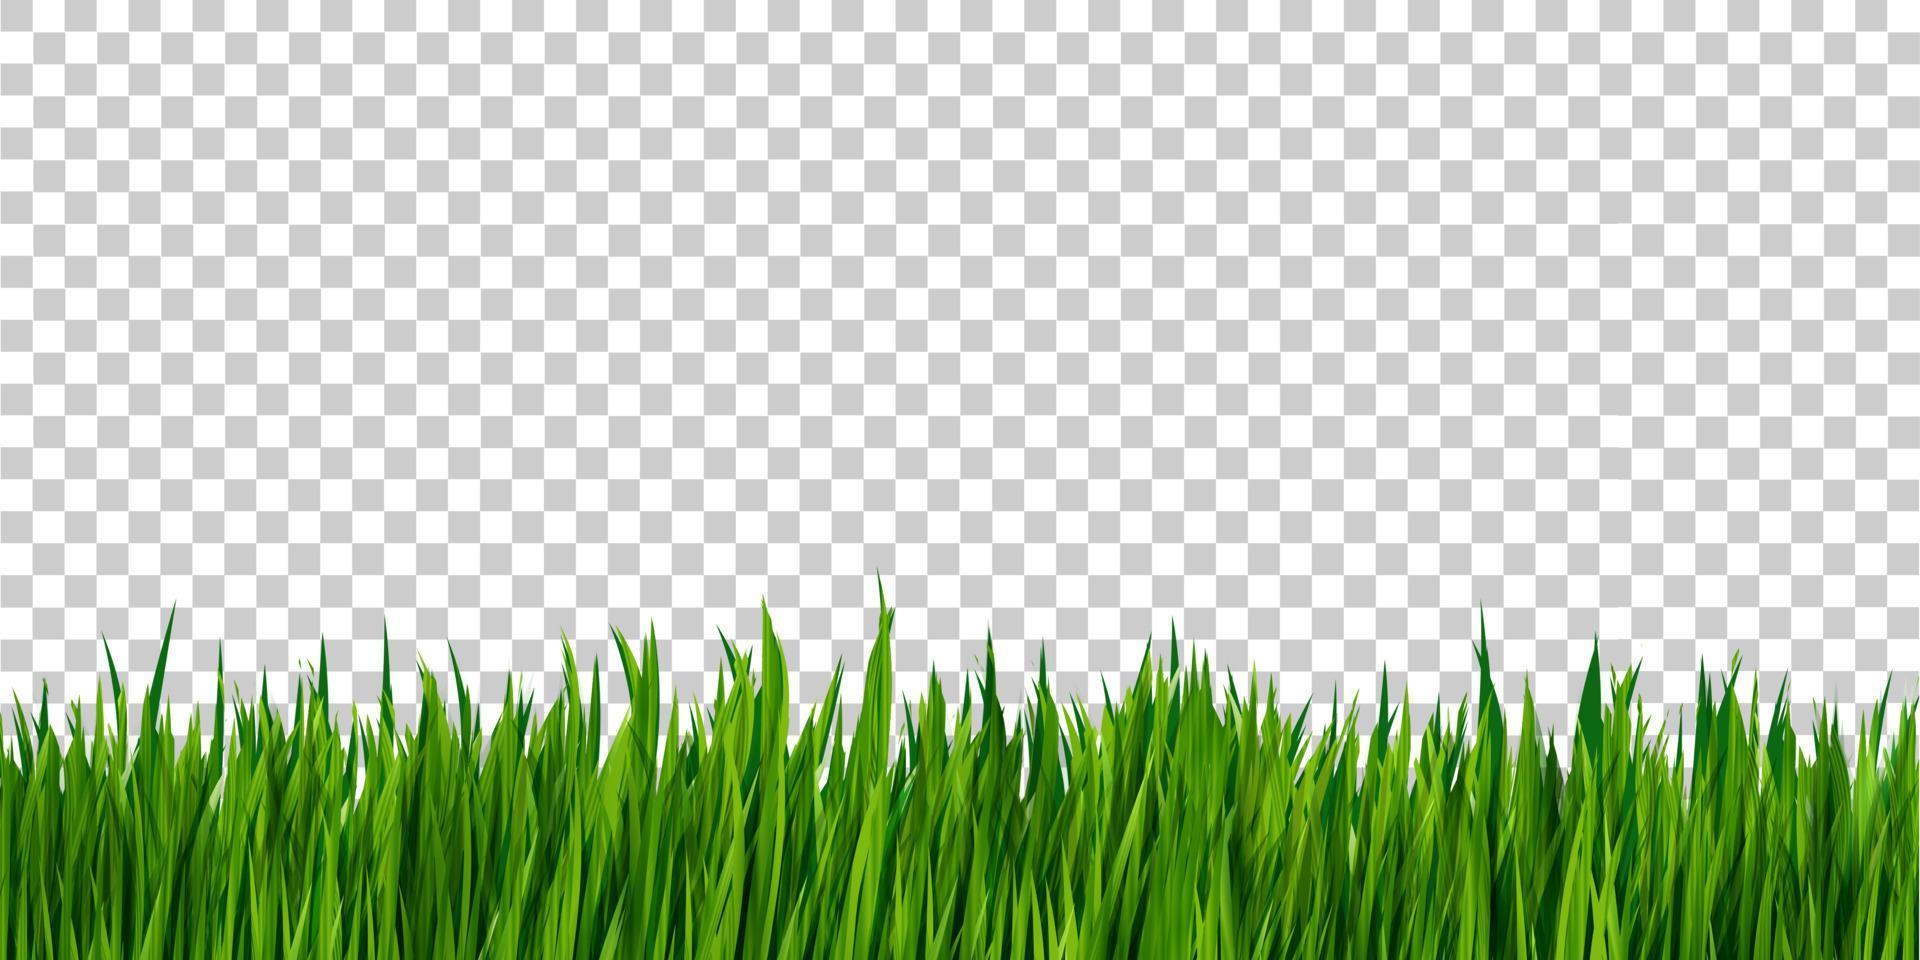 groen gras grens geïsoleerd op transparante achtergrond, grasveld vector